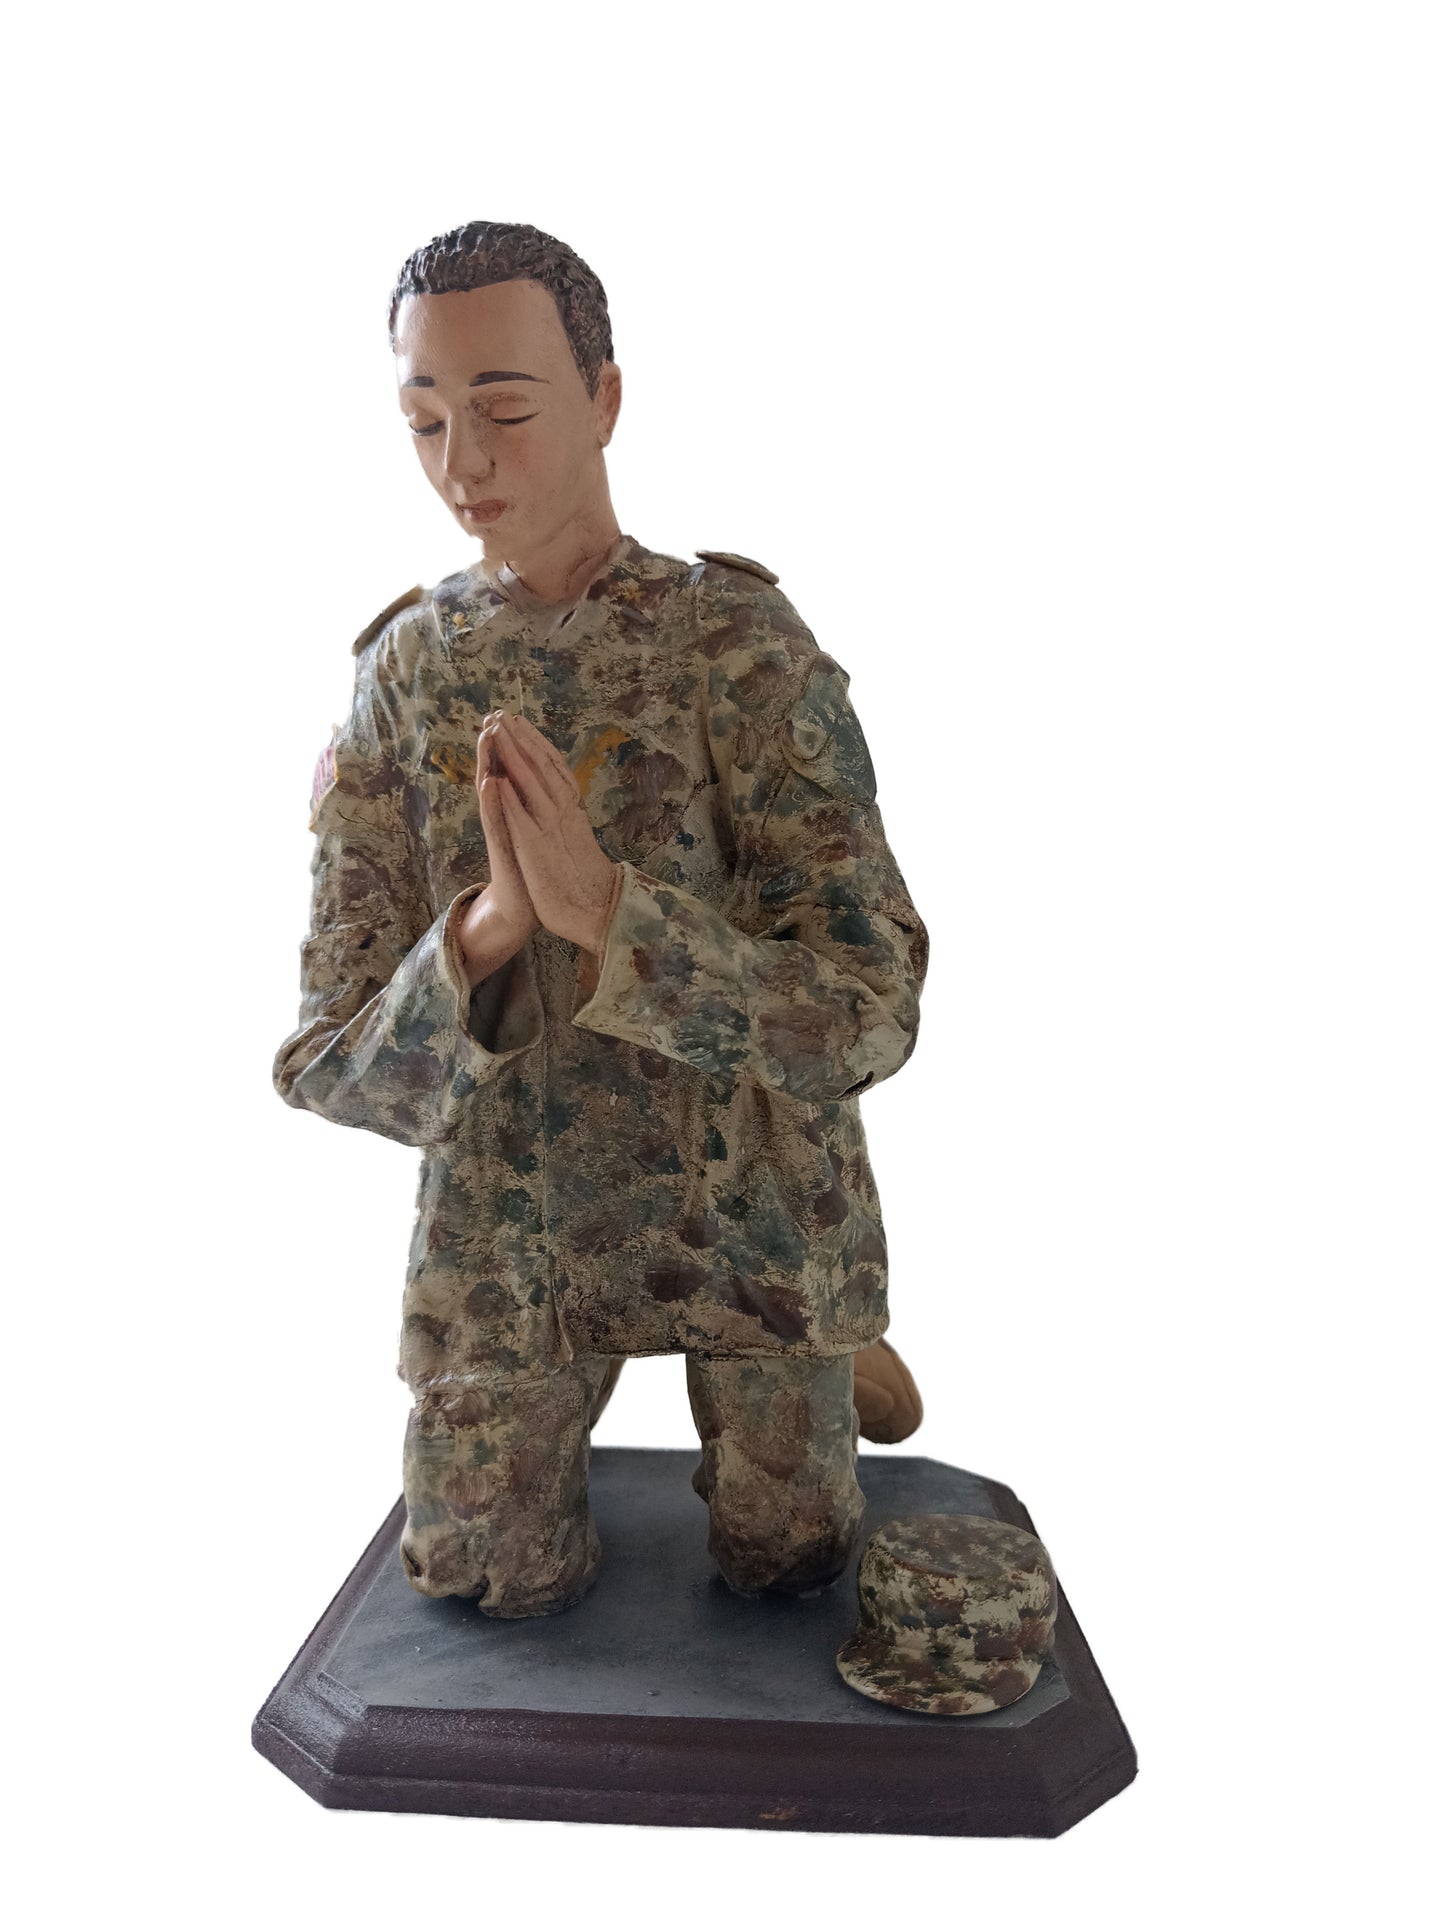 our father prayer - prayer Military official Memorabilia - handcrafted - KMNK Deco